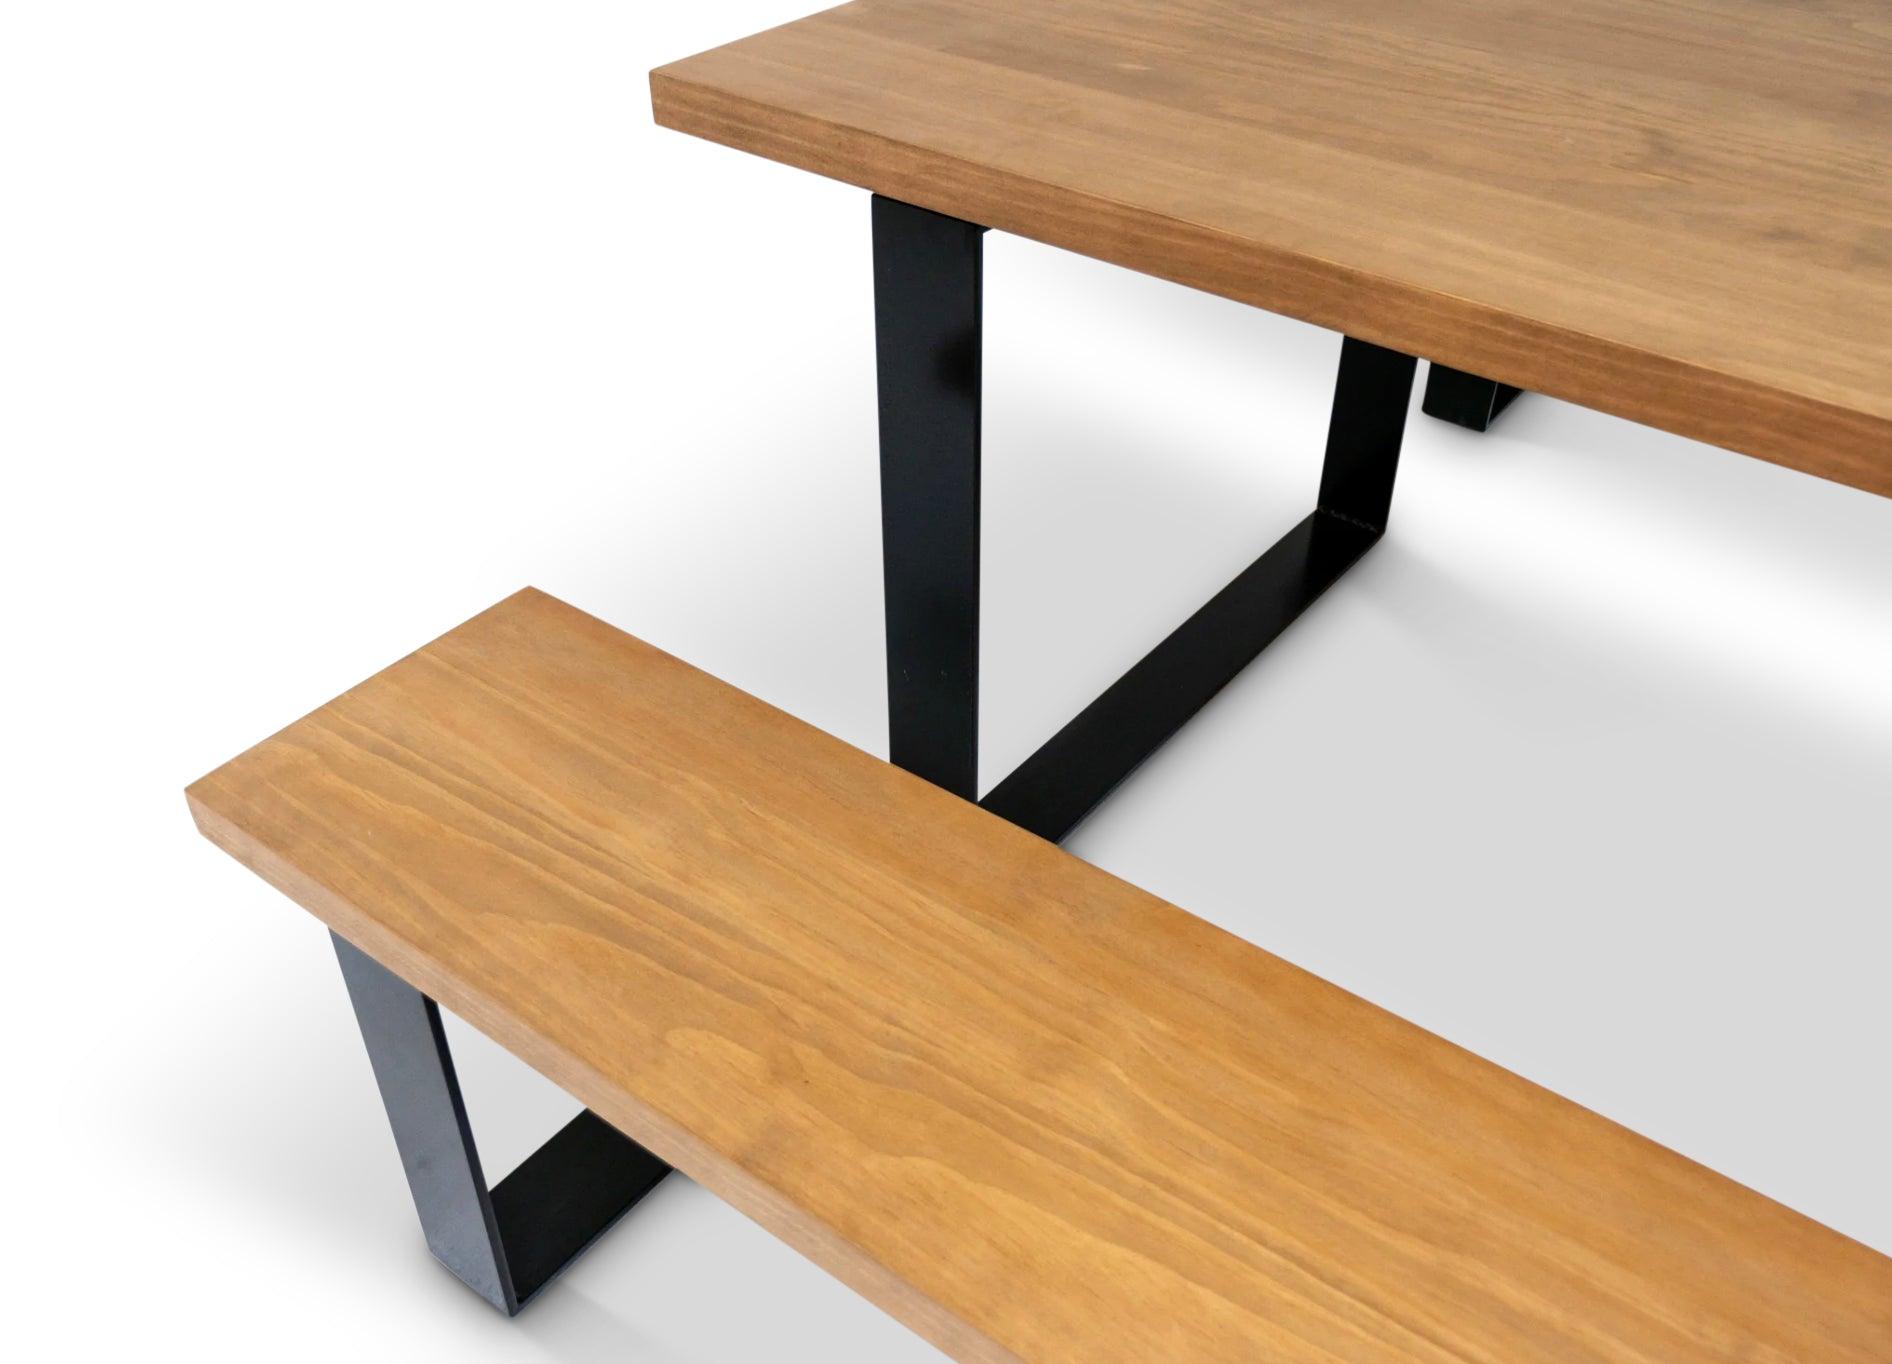 Straight Frame Dining Table - Innate Furniture